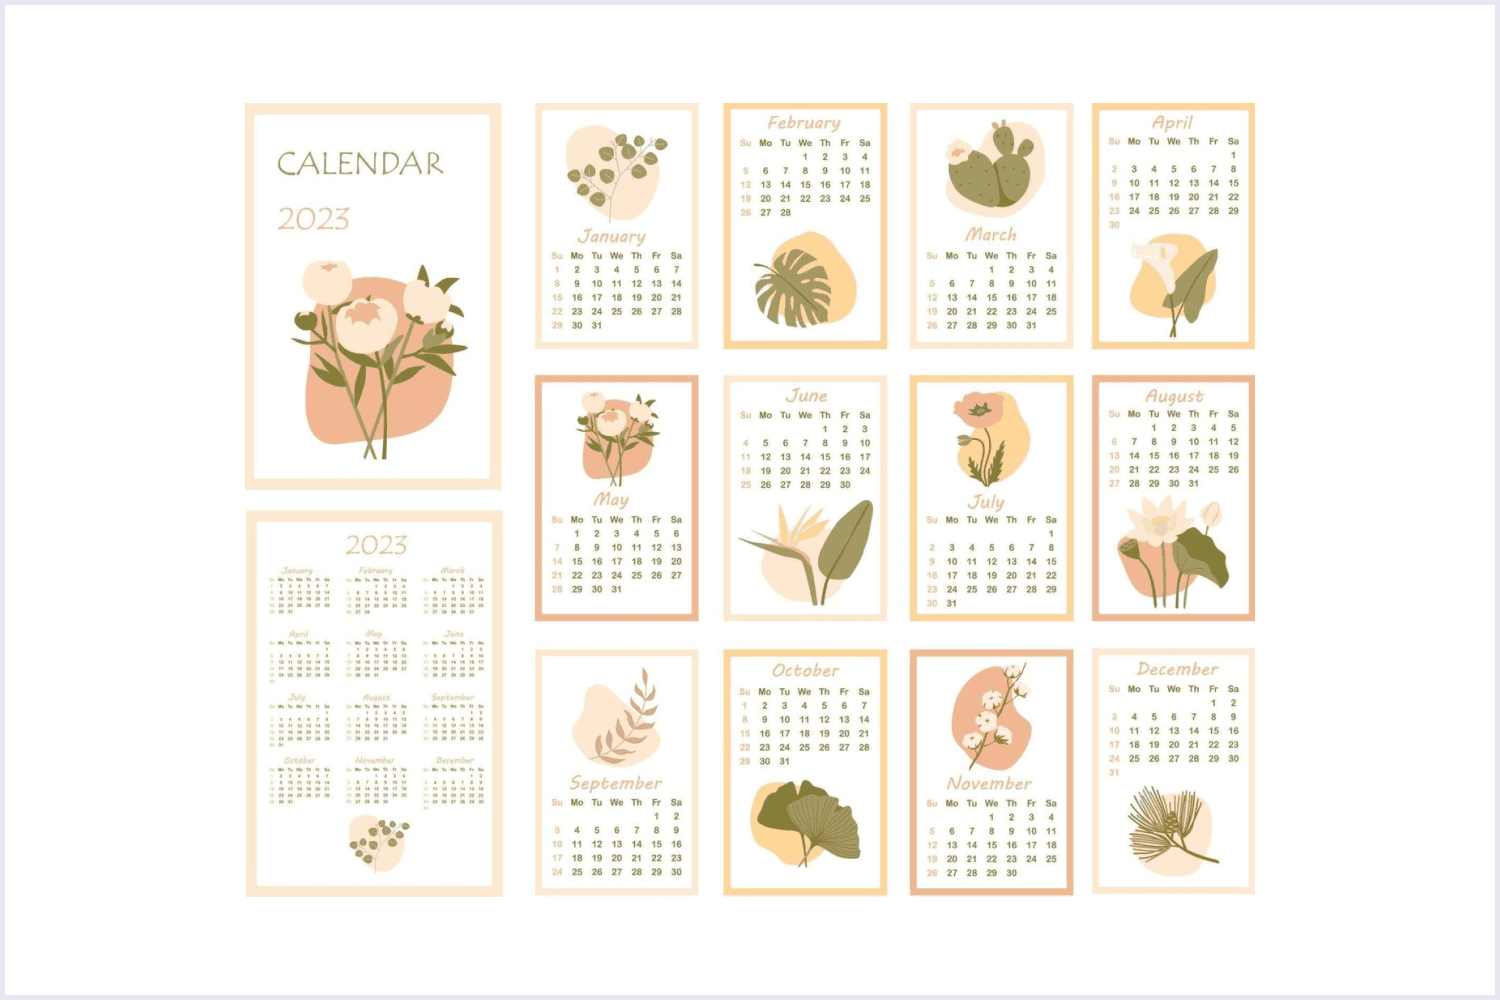 Calendar with a stunning minimalist floral design.